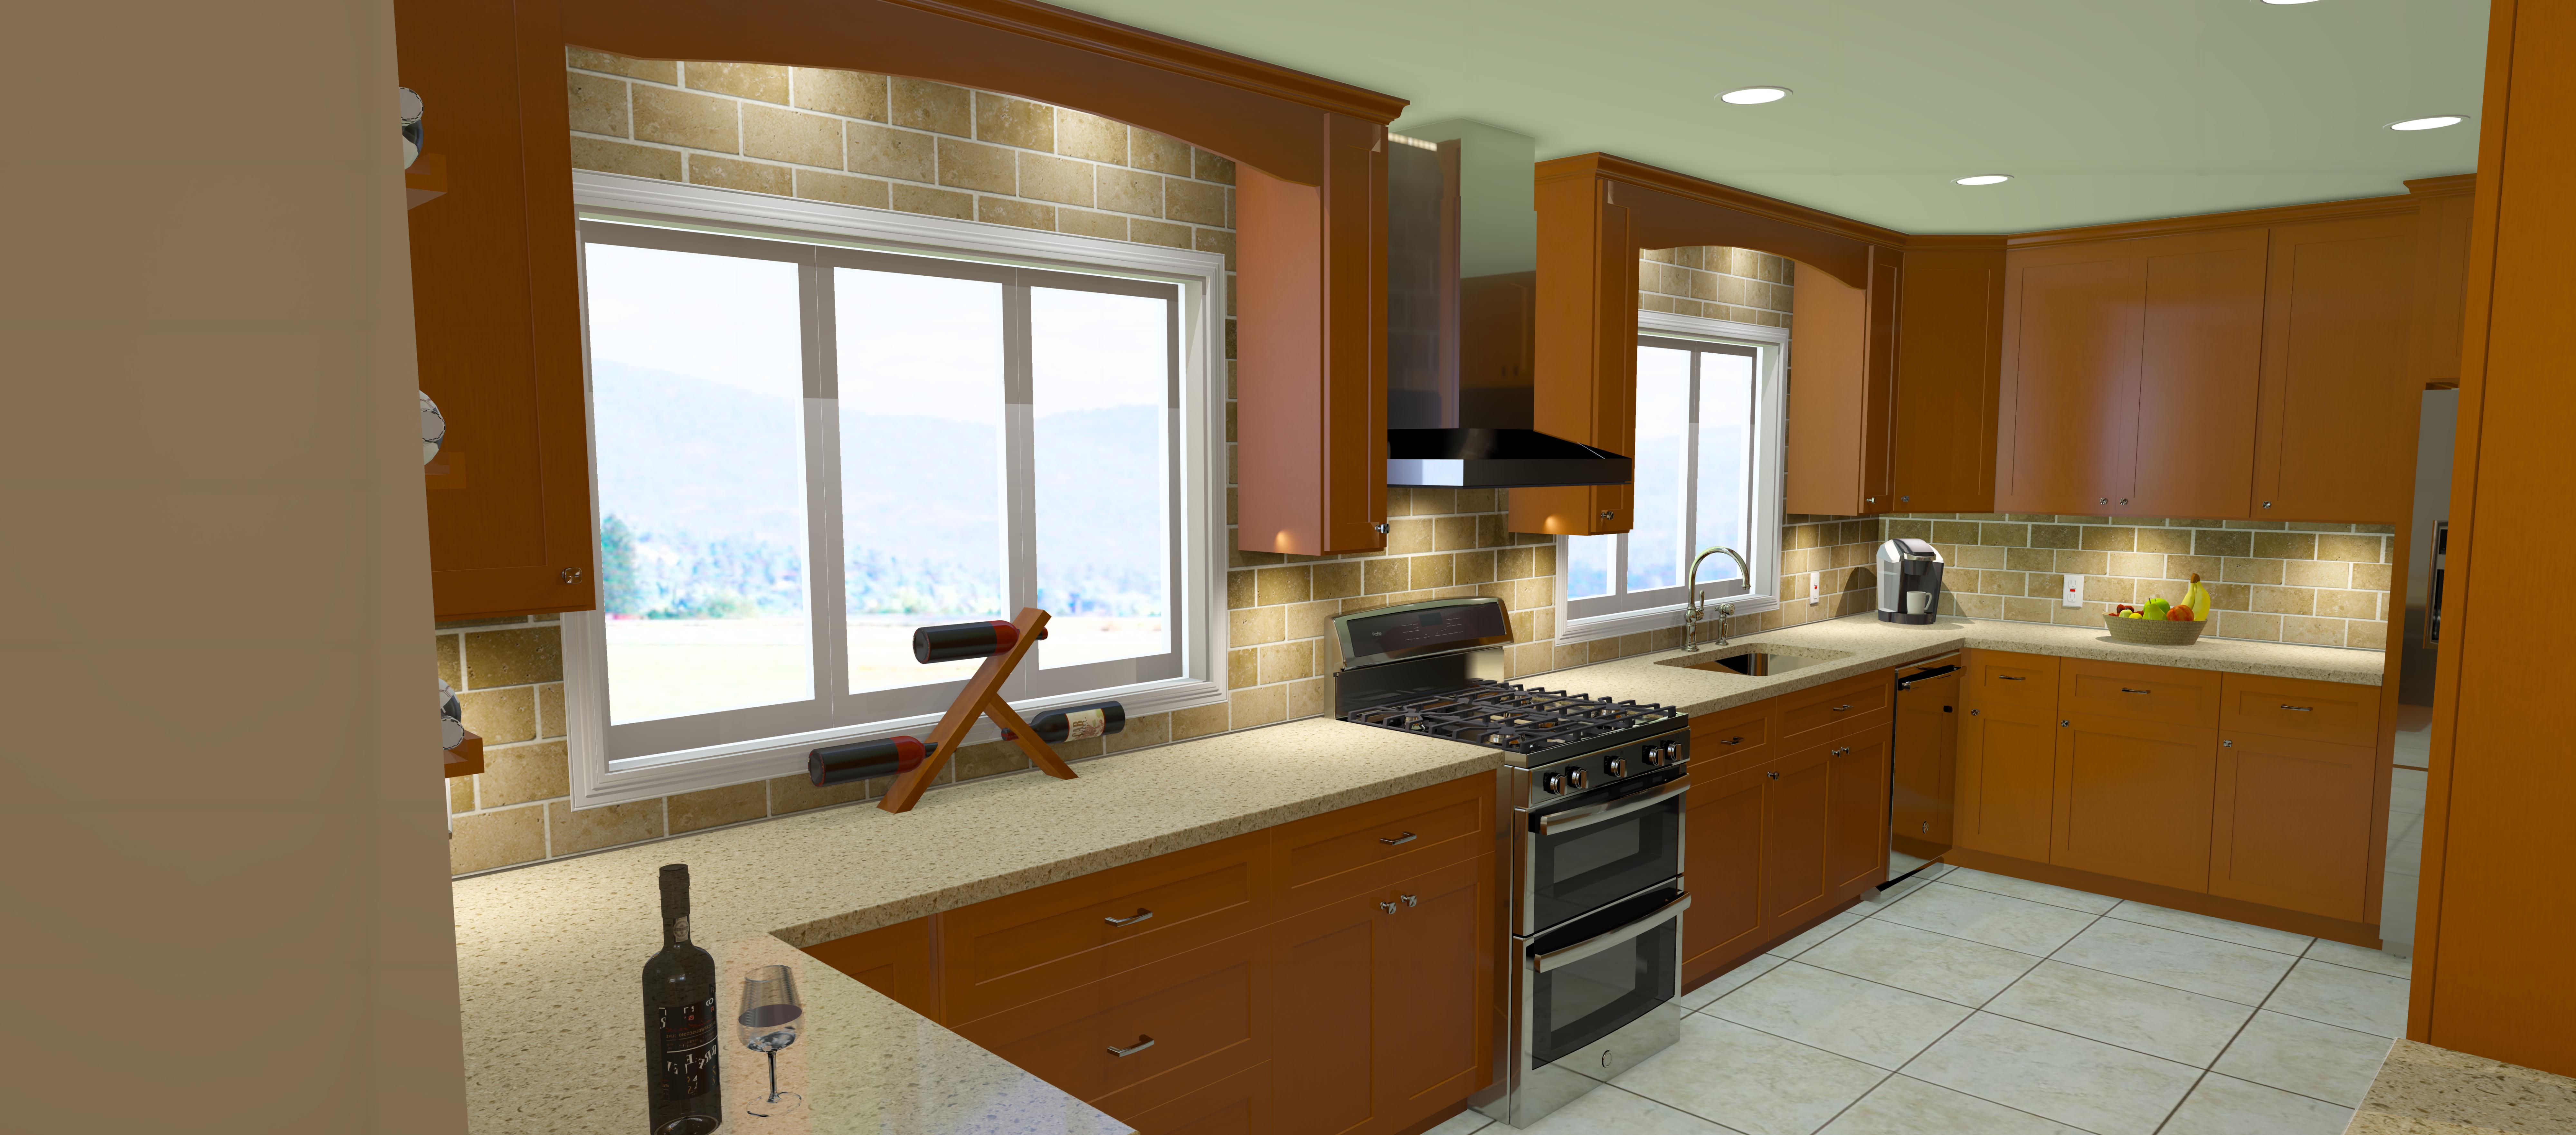 kitchen virtual designer free upload photo